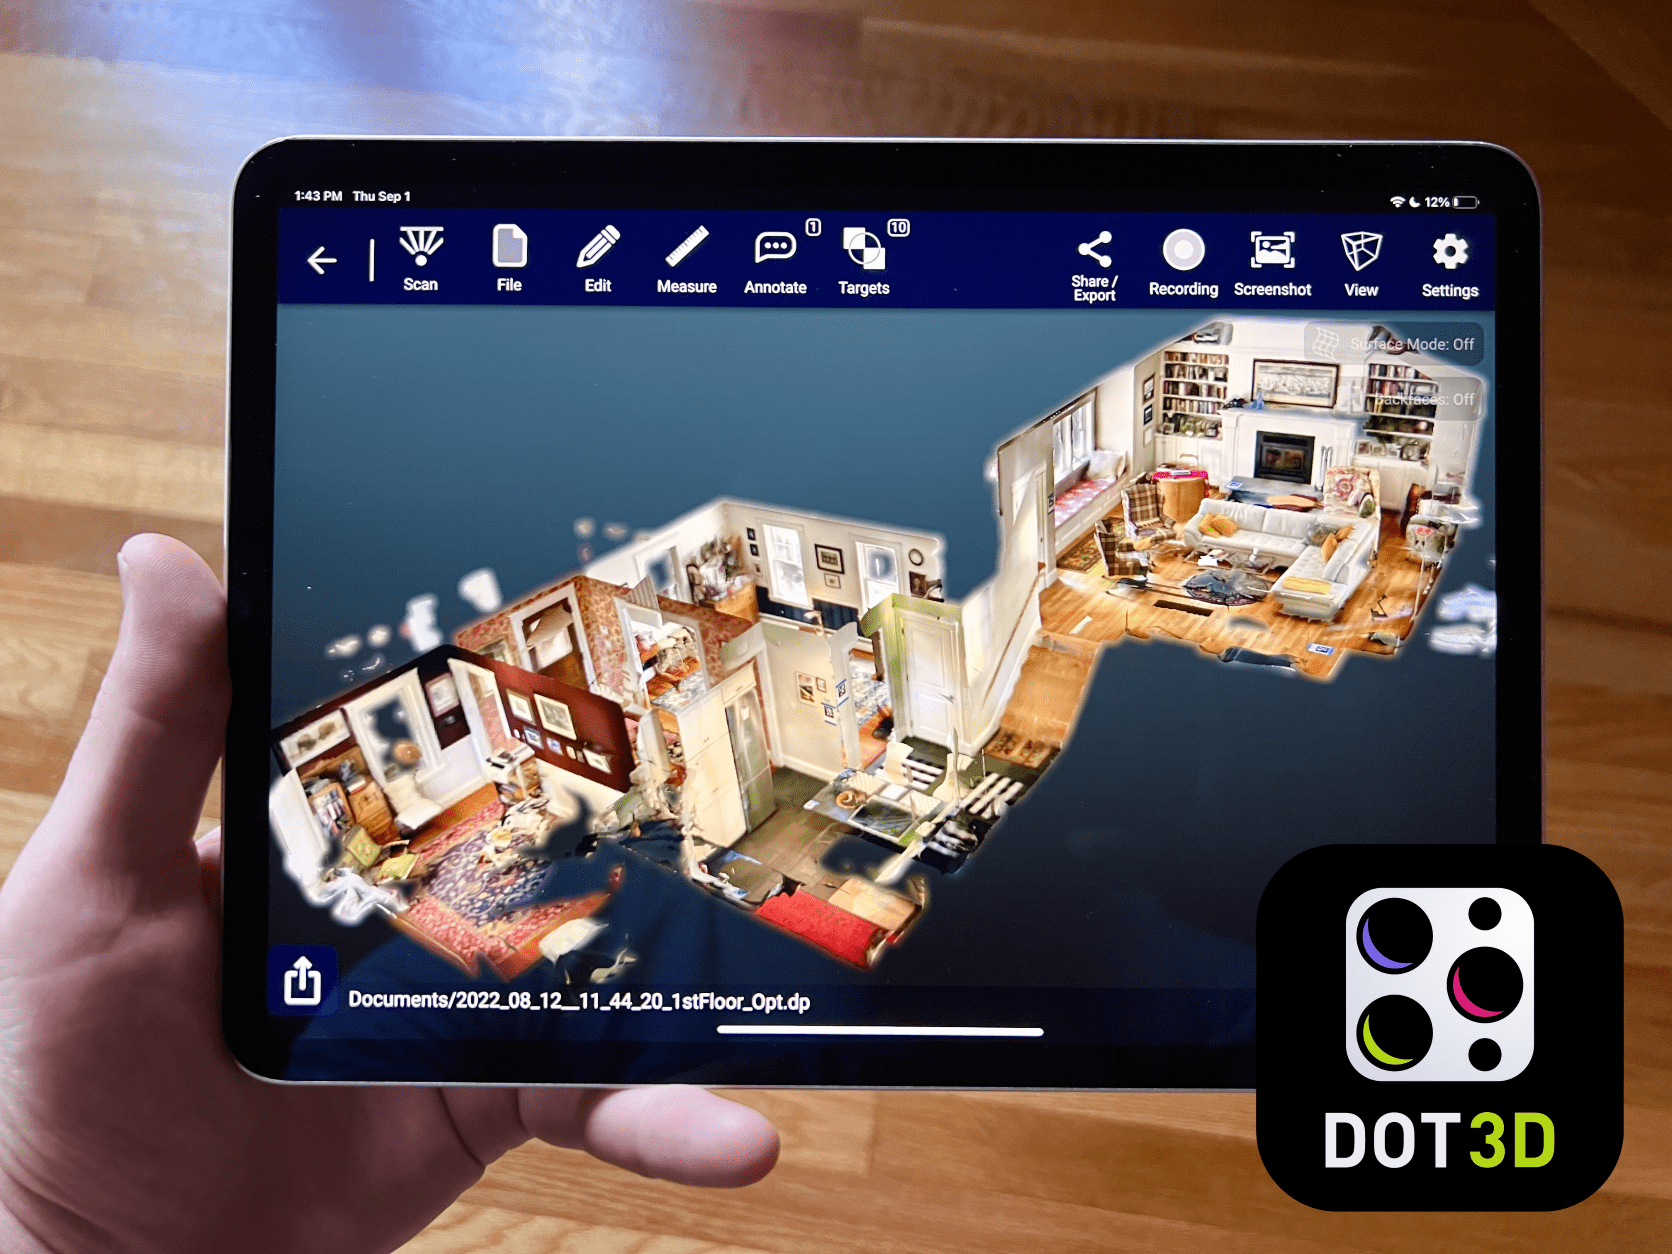 Dot3D for iOS LiDAR